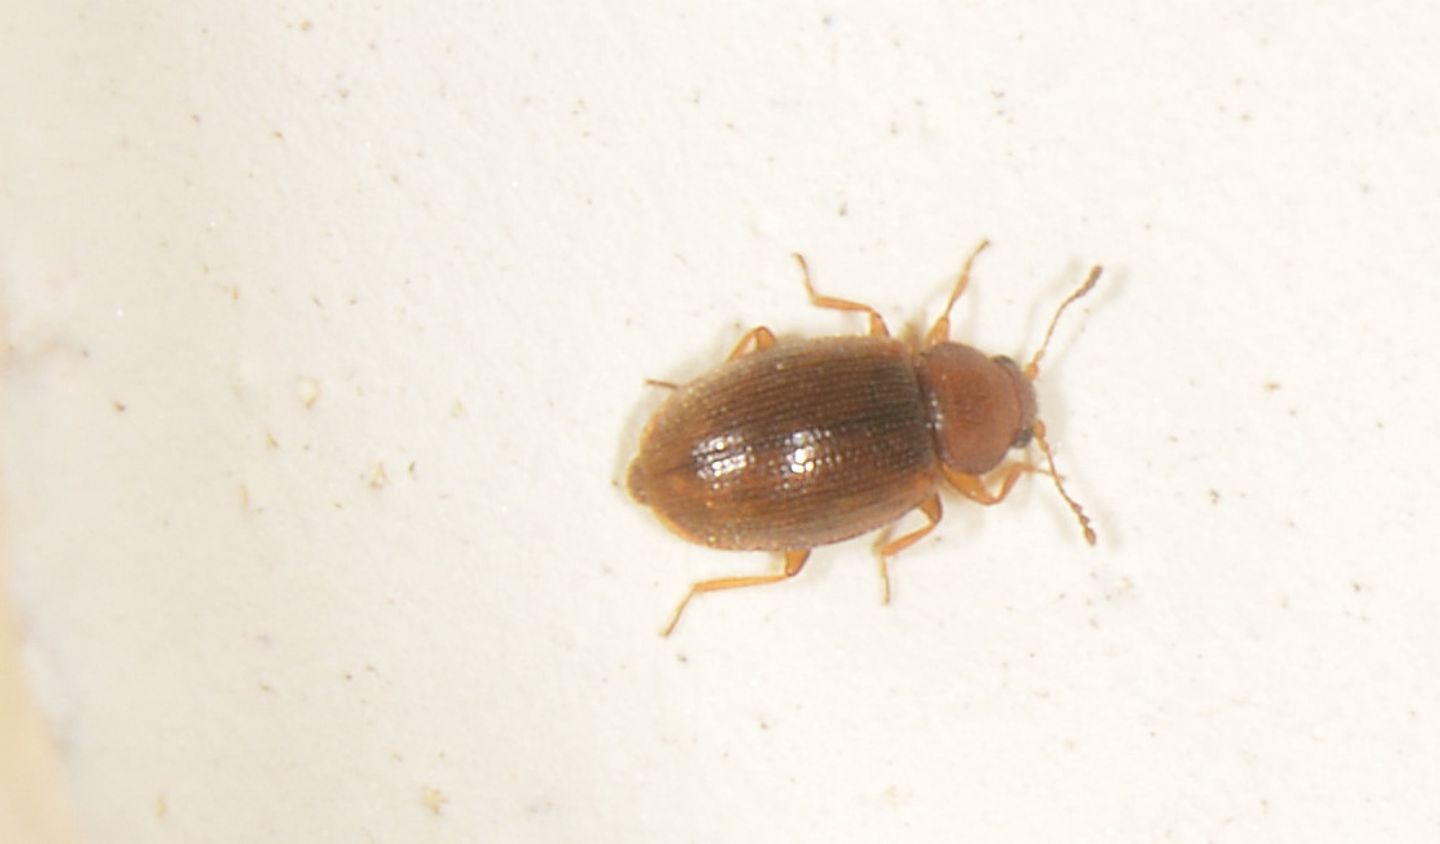 Molto piccolo - Latridiidae: Melanophthalma sp. (cfr.)